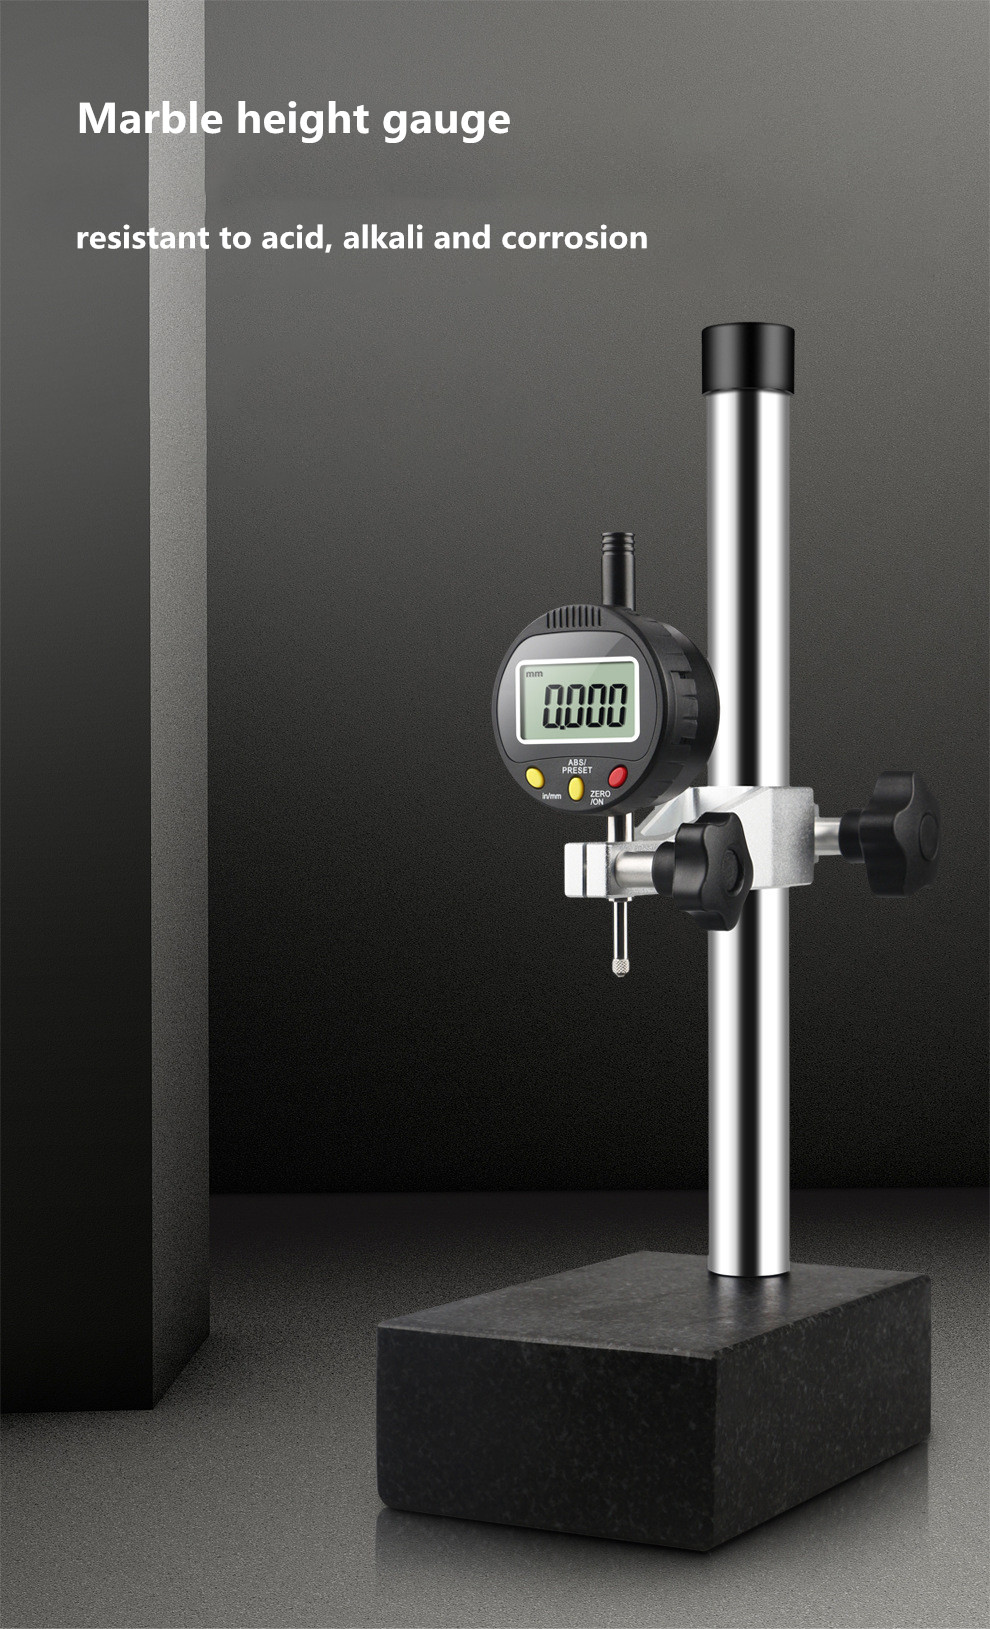 10015050-Marble-Comparison-Test-Table-Bench-Measuring-Platform-0-1mm-Dial-Gauge-Indicator-Height-Sta-1737189-1